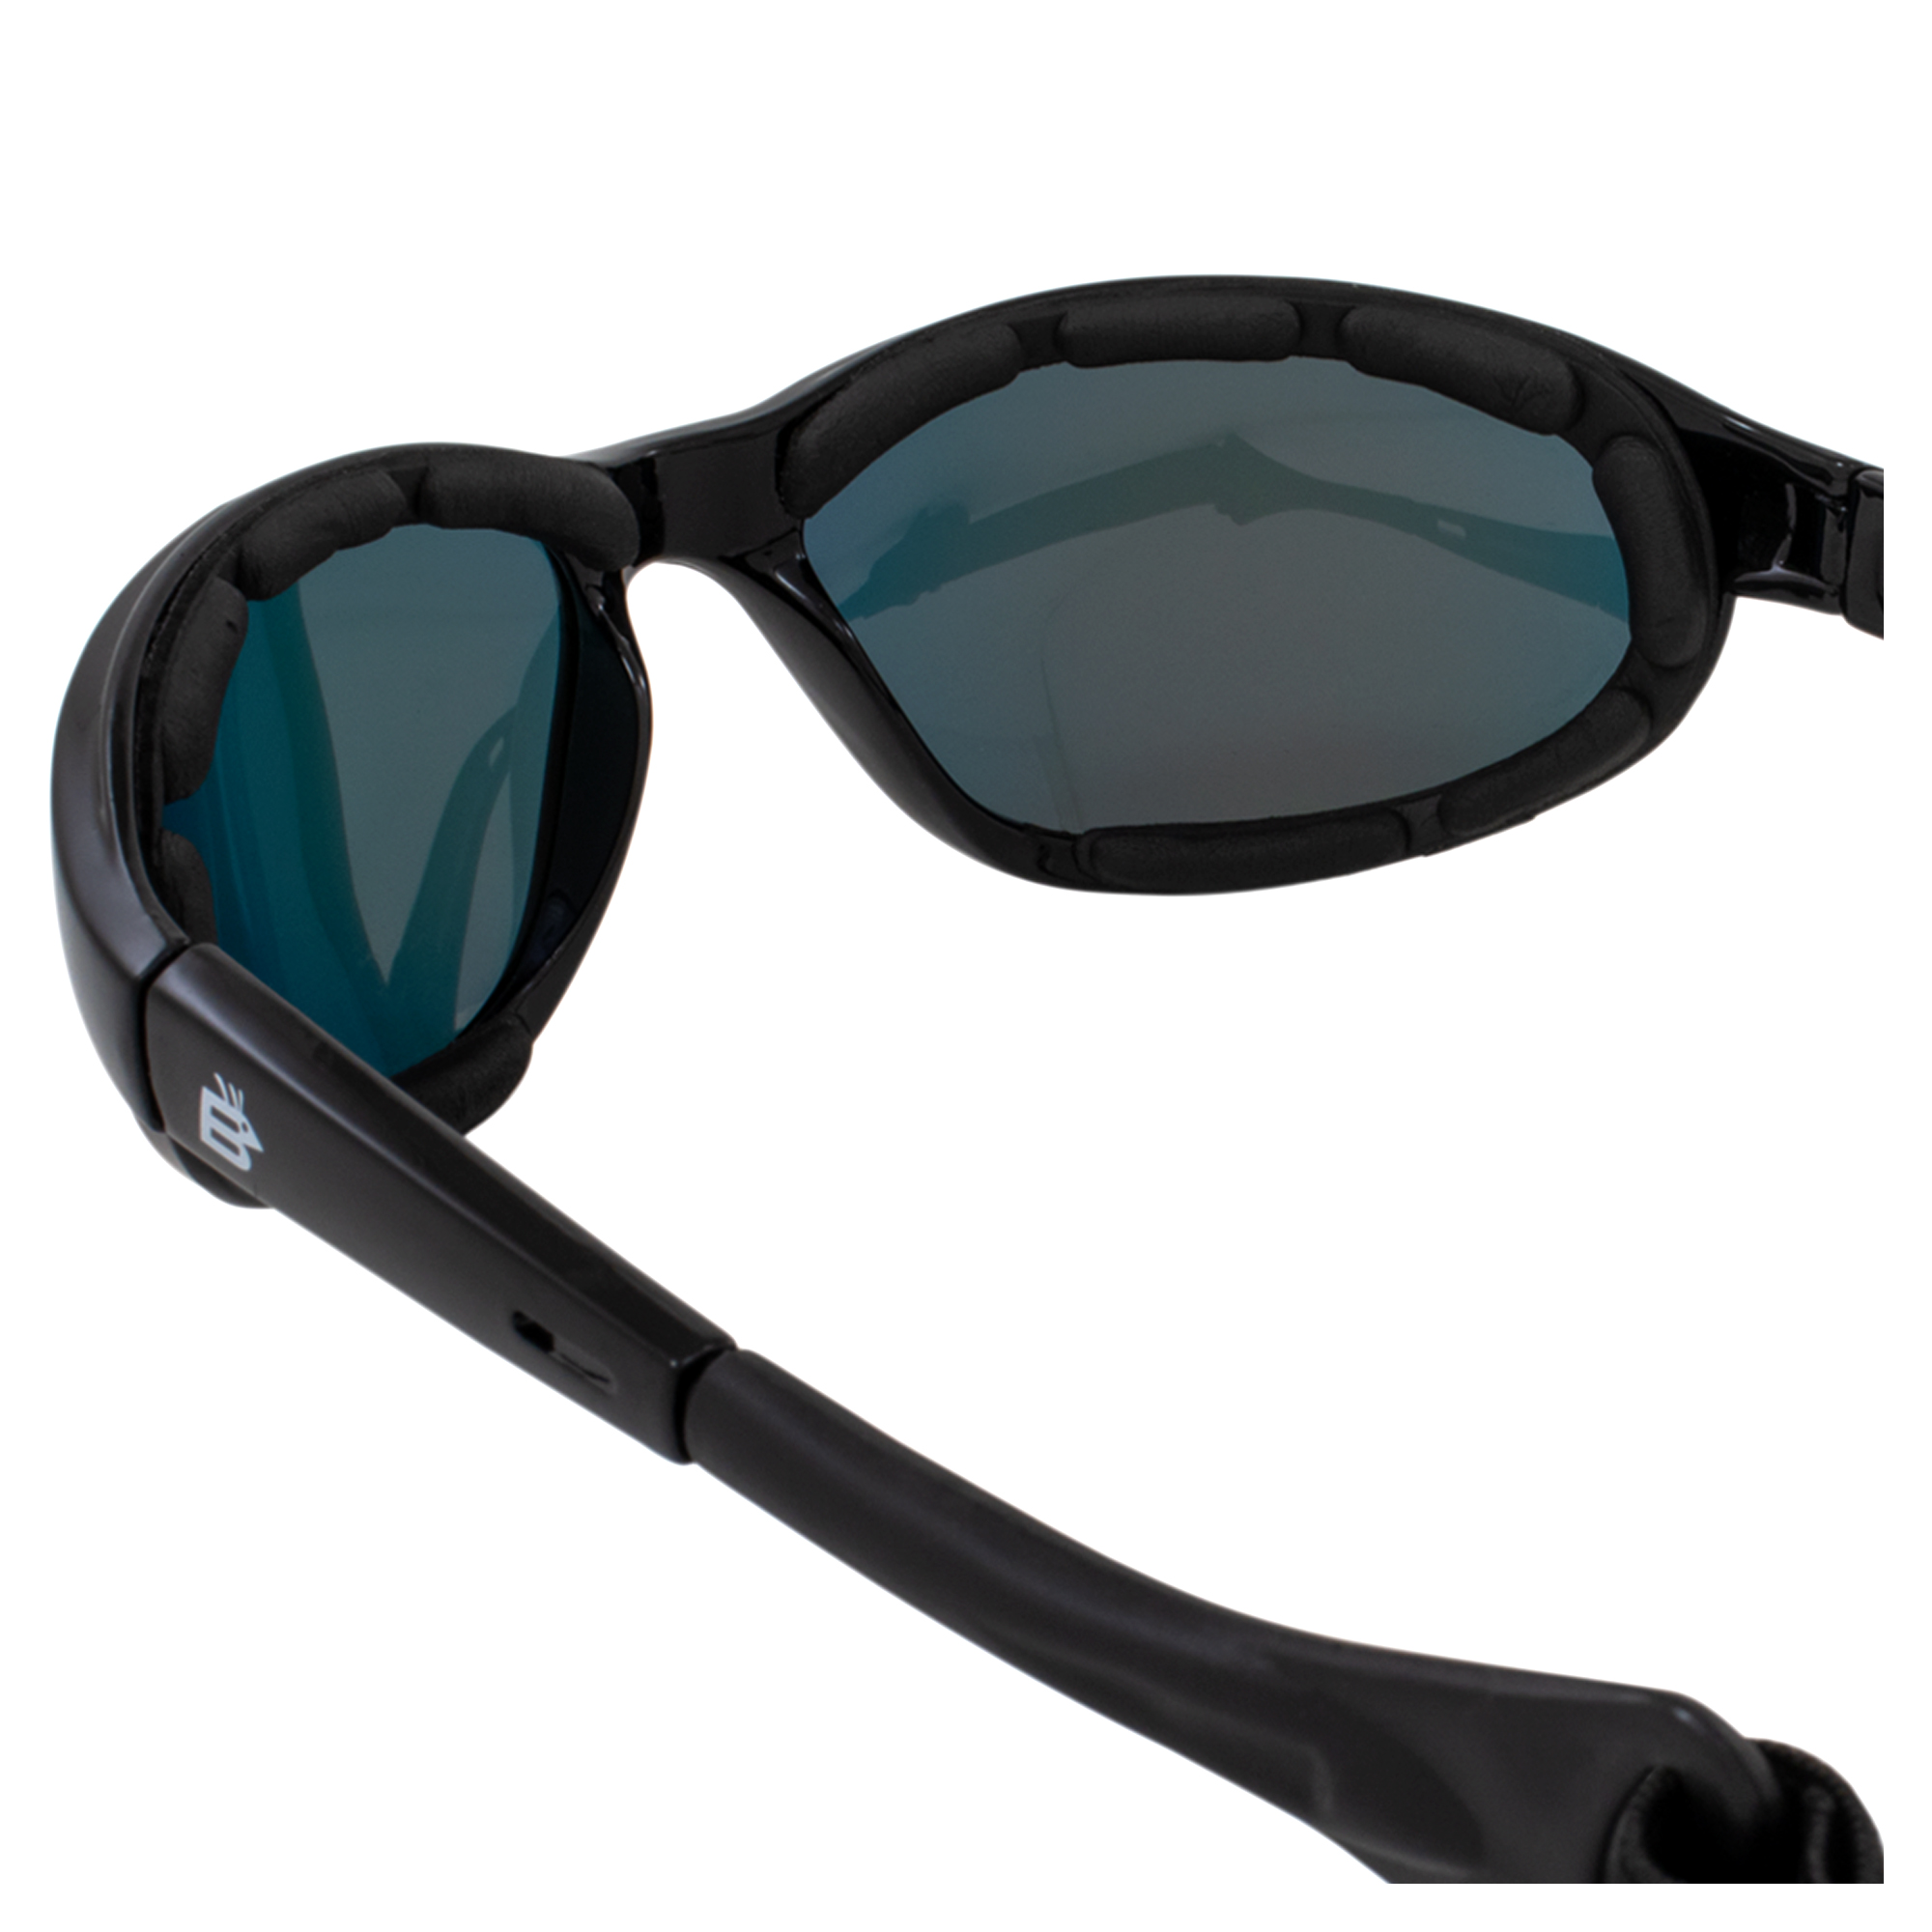 Birdz Eyewear Sail Padded Jetski Sunglasses Goggles Polarized Sports Watersports Boating Fishing for Men or Women 2 Pairs Black Frame w/Red & Green Mirror Lenses - image 4 of 7